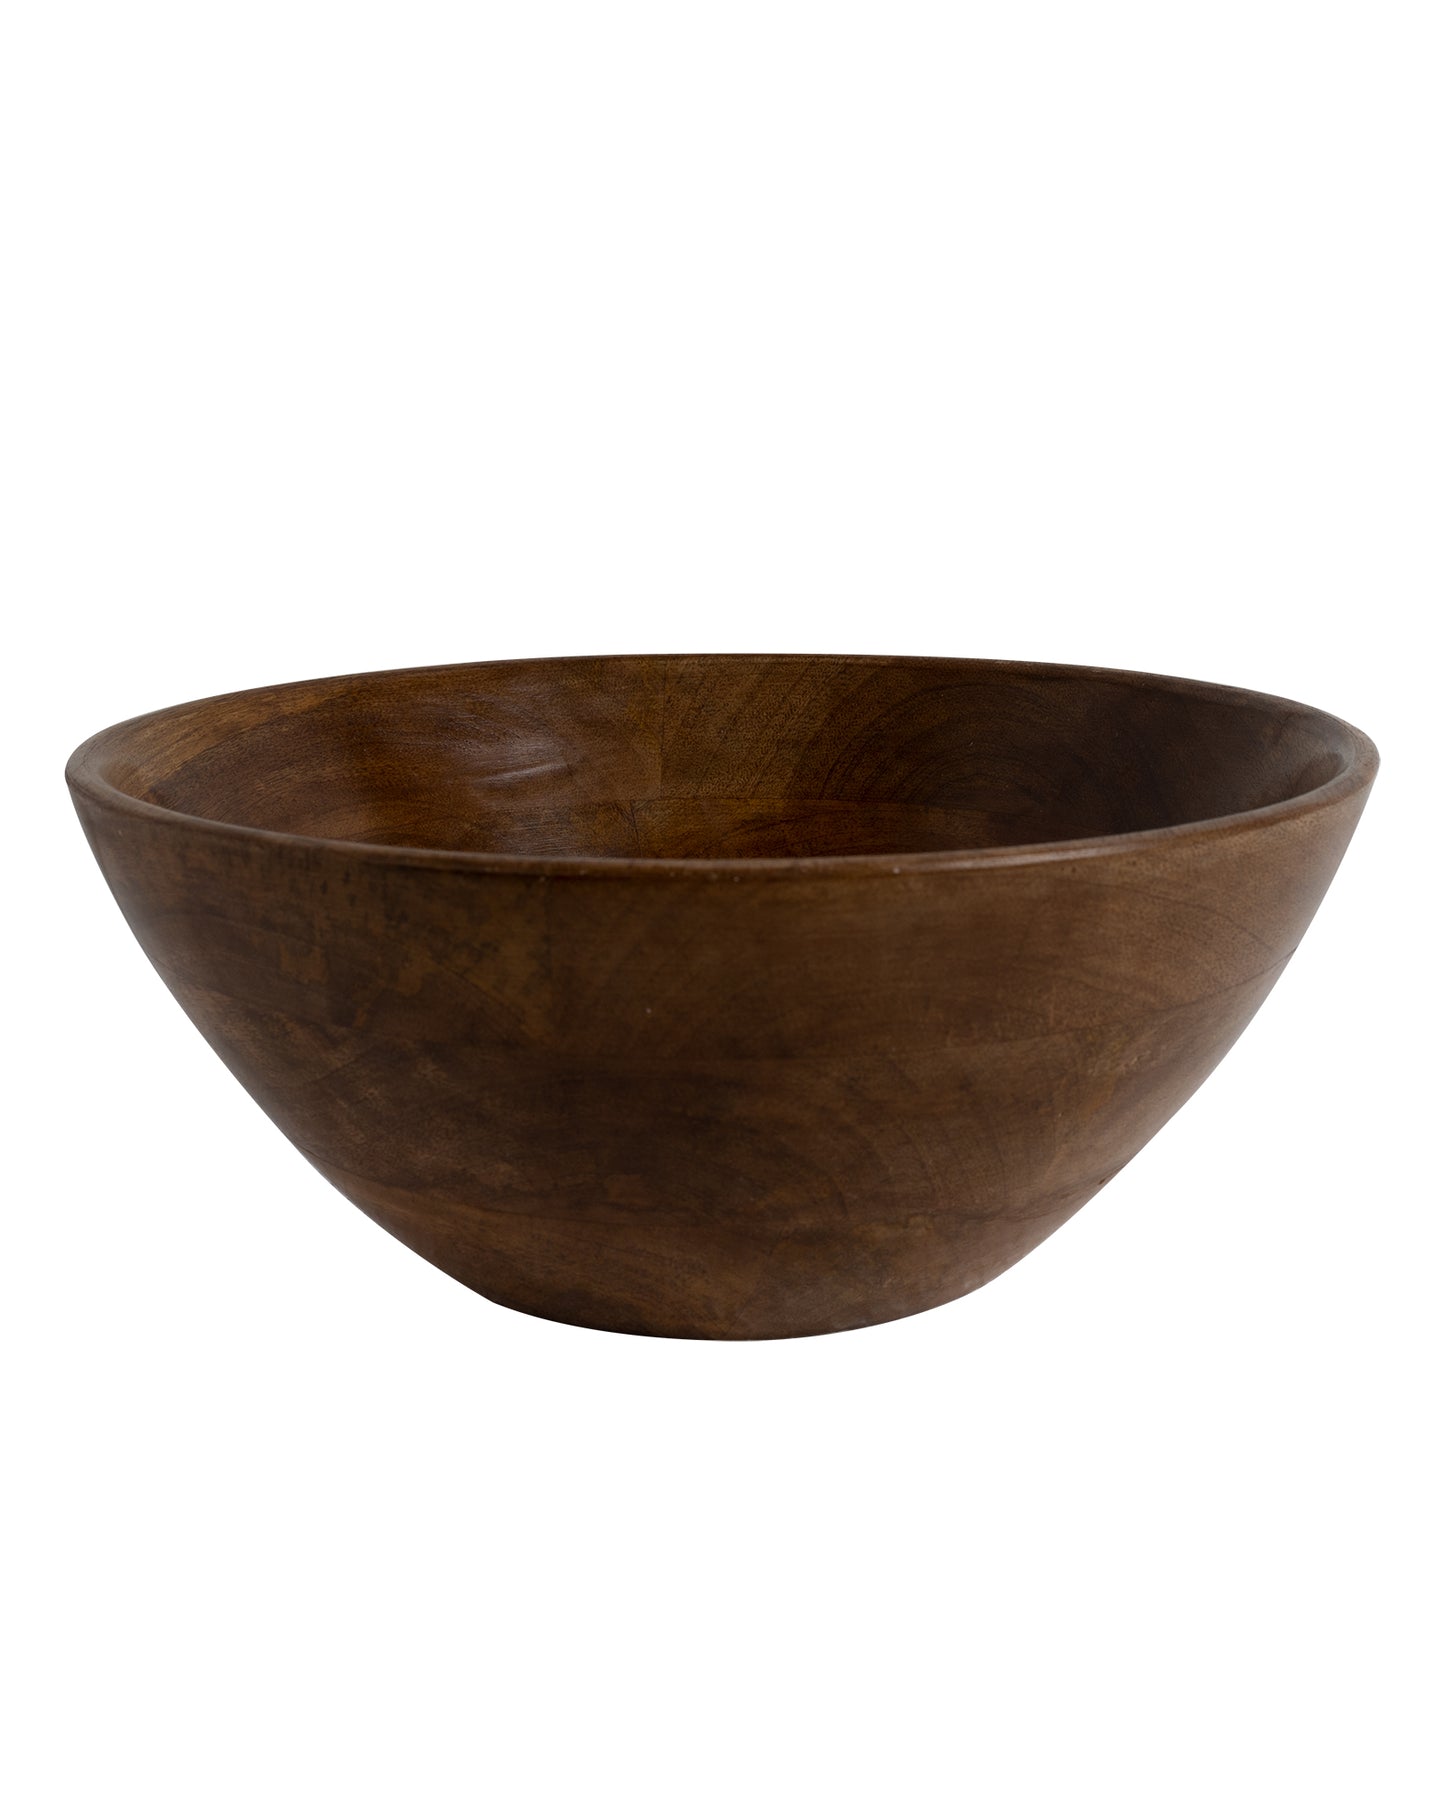 Wooden bowl flat large, Walnut finish, fruit & snack serving bowl